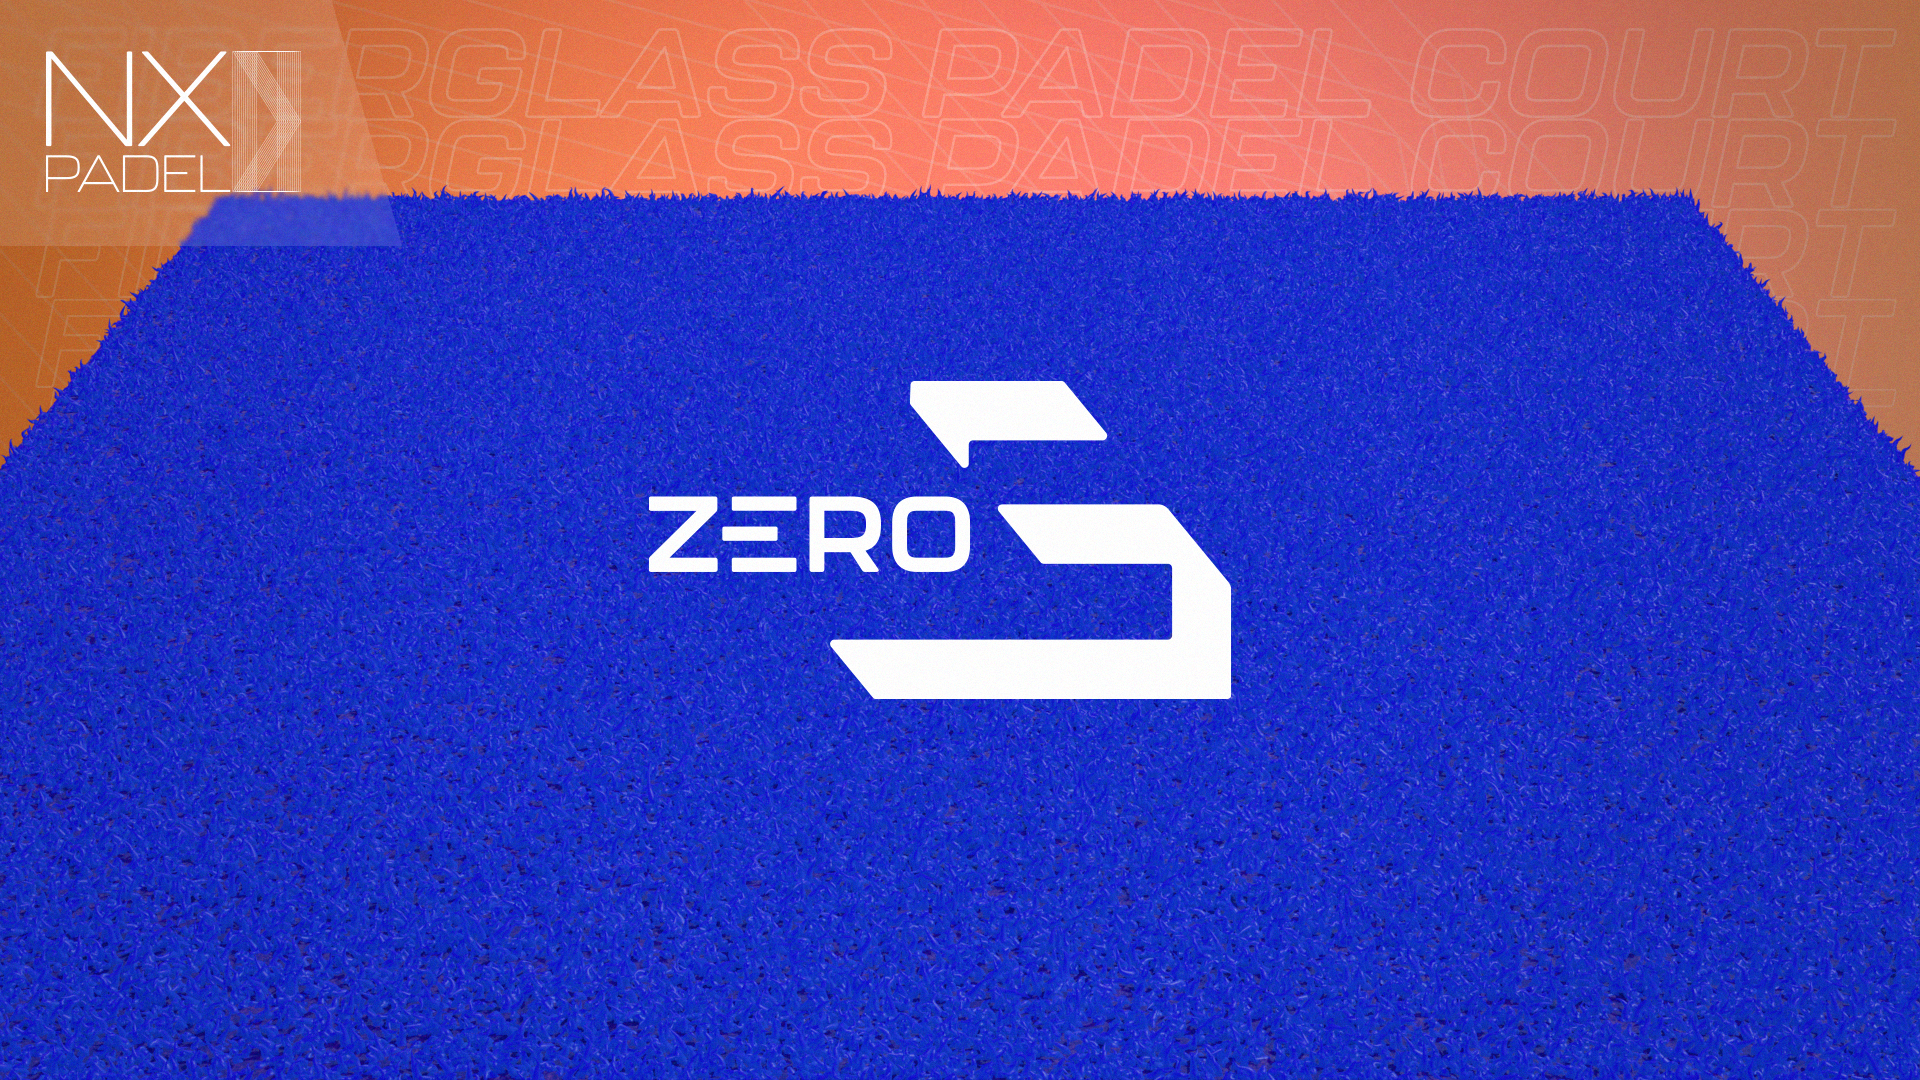 NXPadel has launched ZeroS, the Next-Gen Padel Carpet  